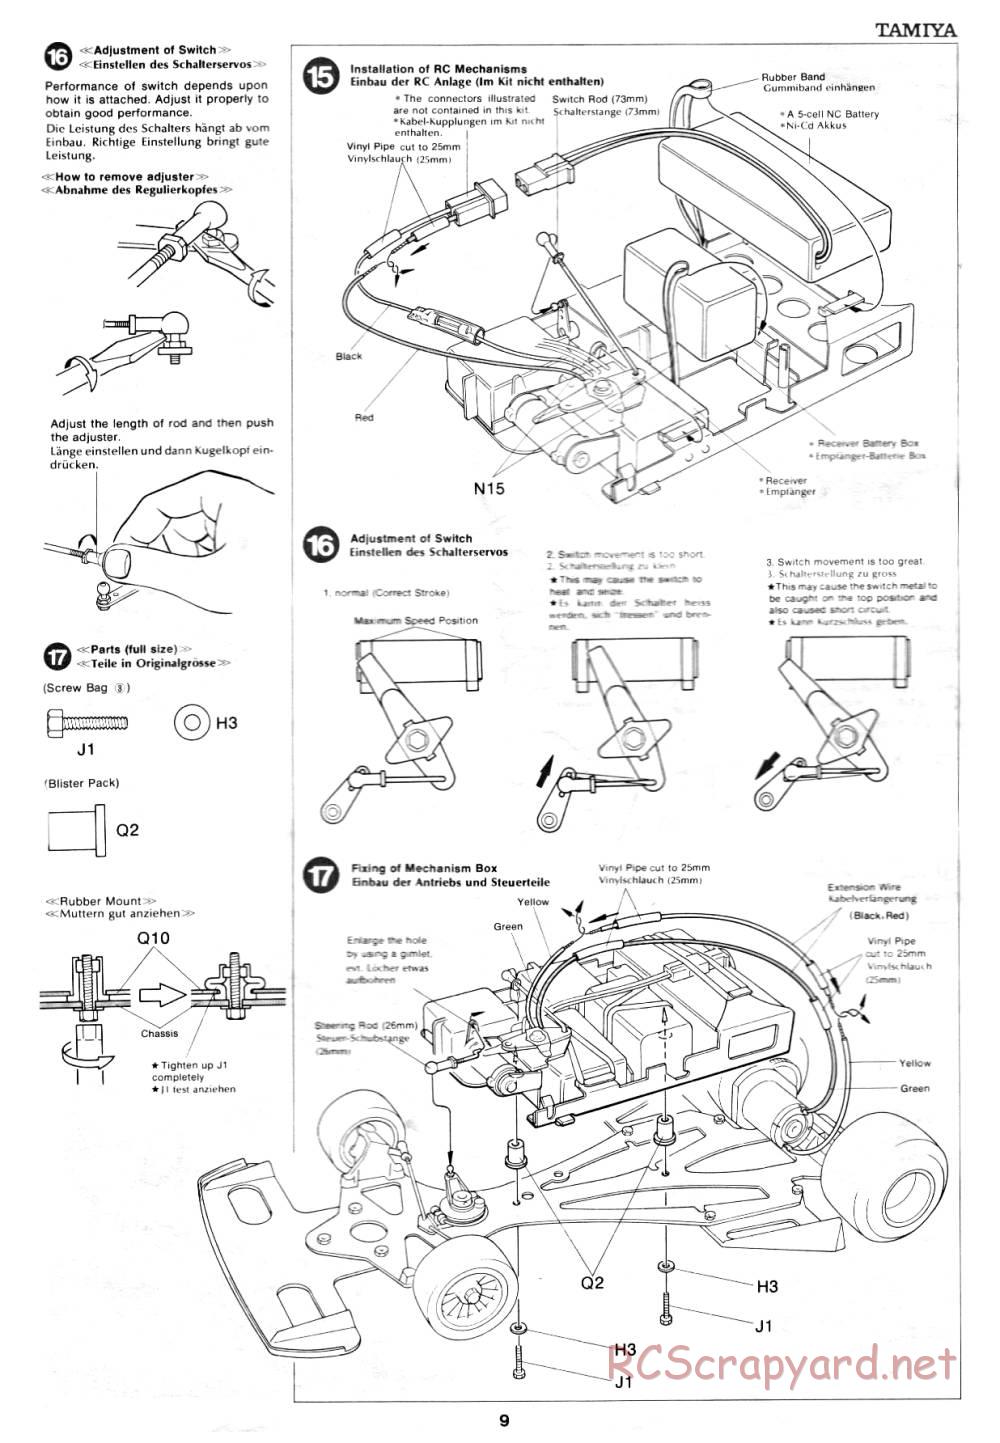 Tamiya - Ferrari 312T3 - 58011 - Manual - Page 9